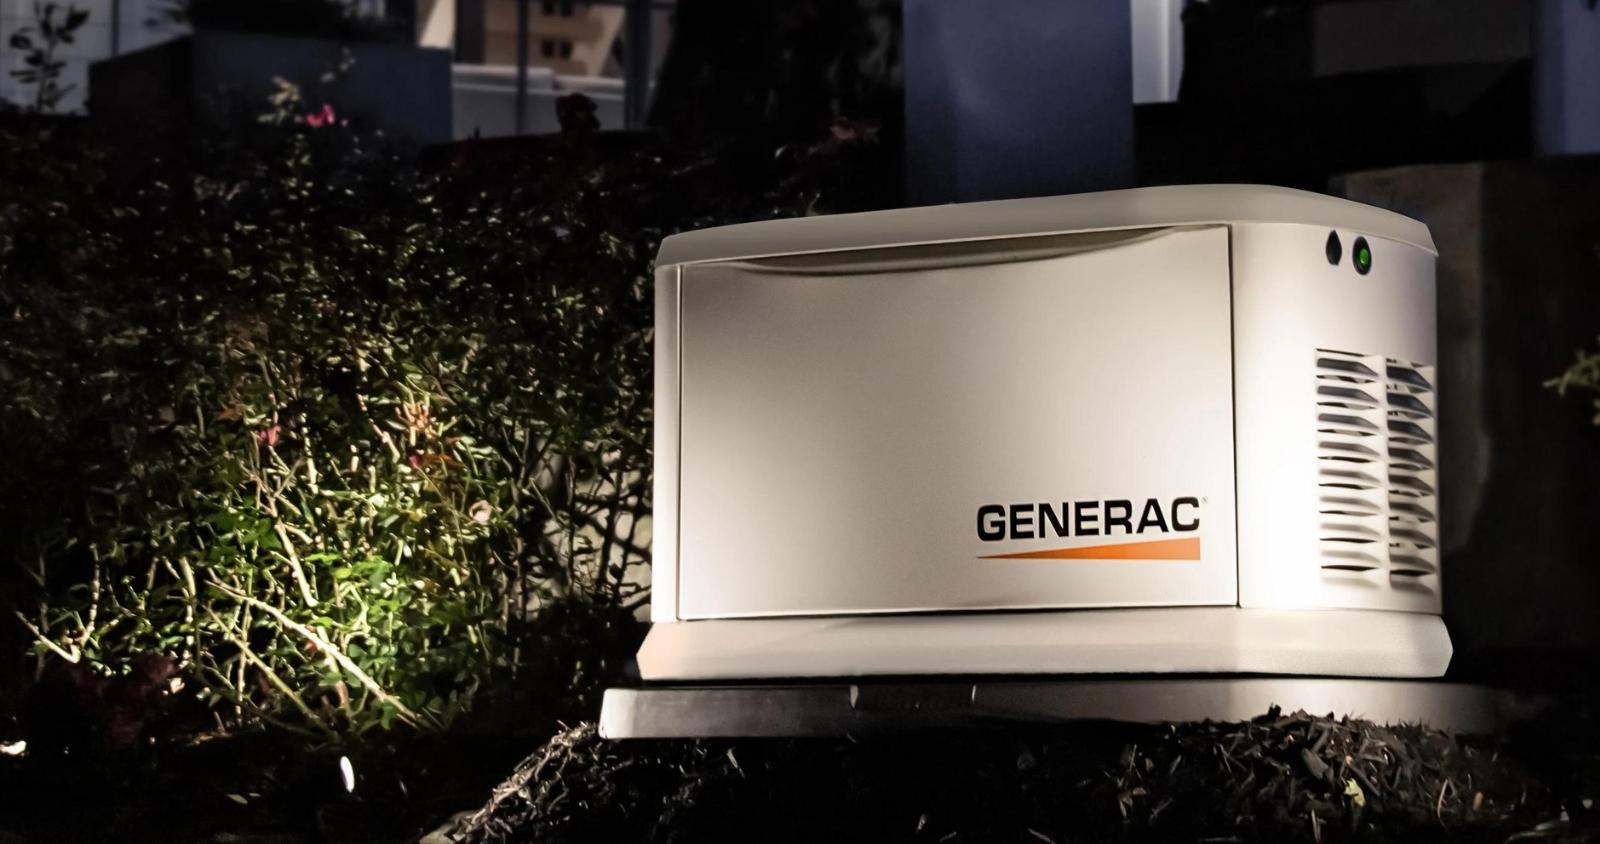 Generac residential generator at night